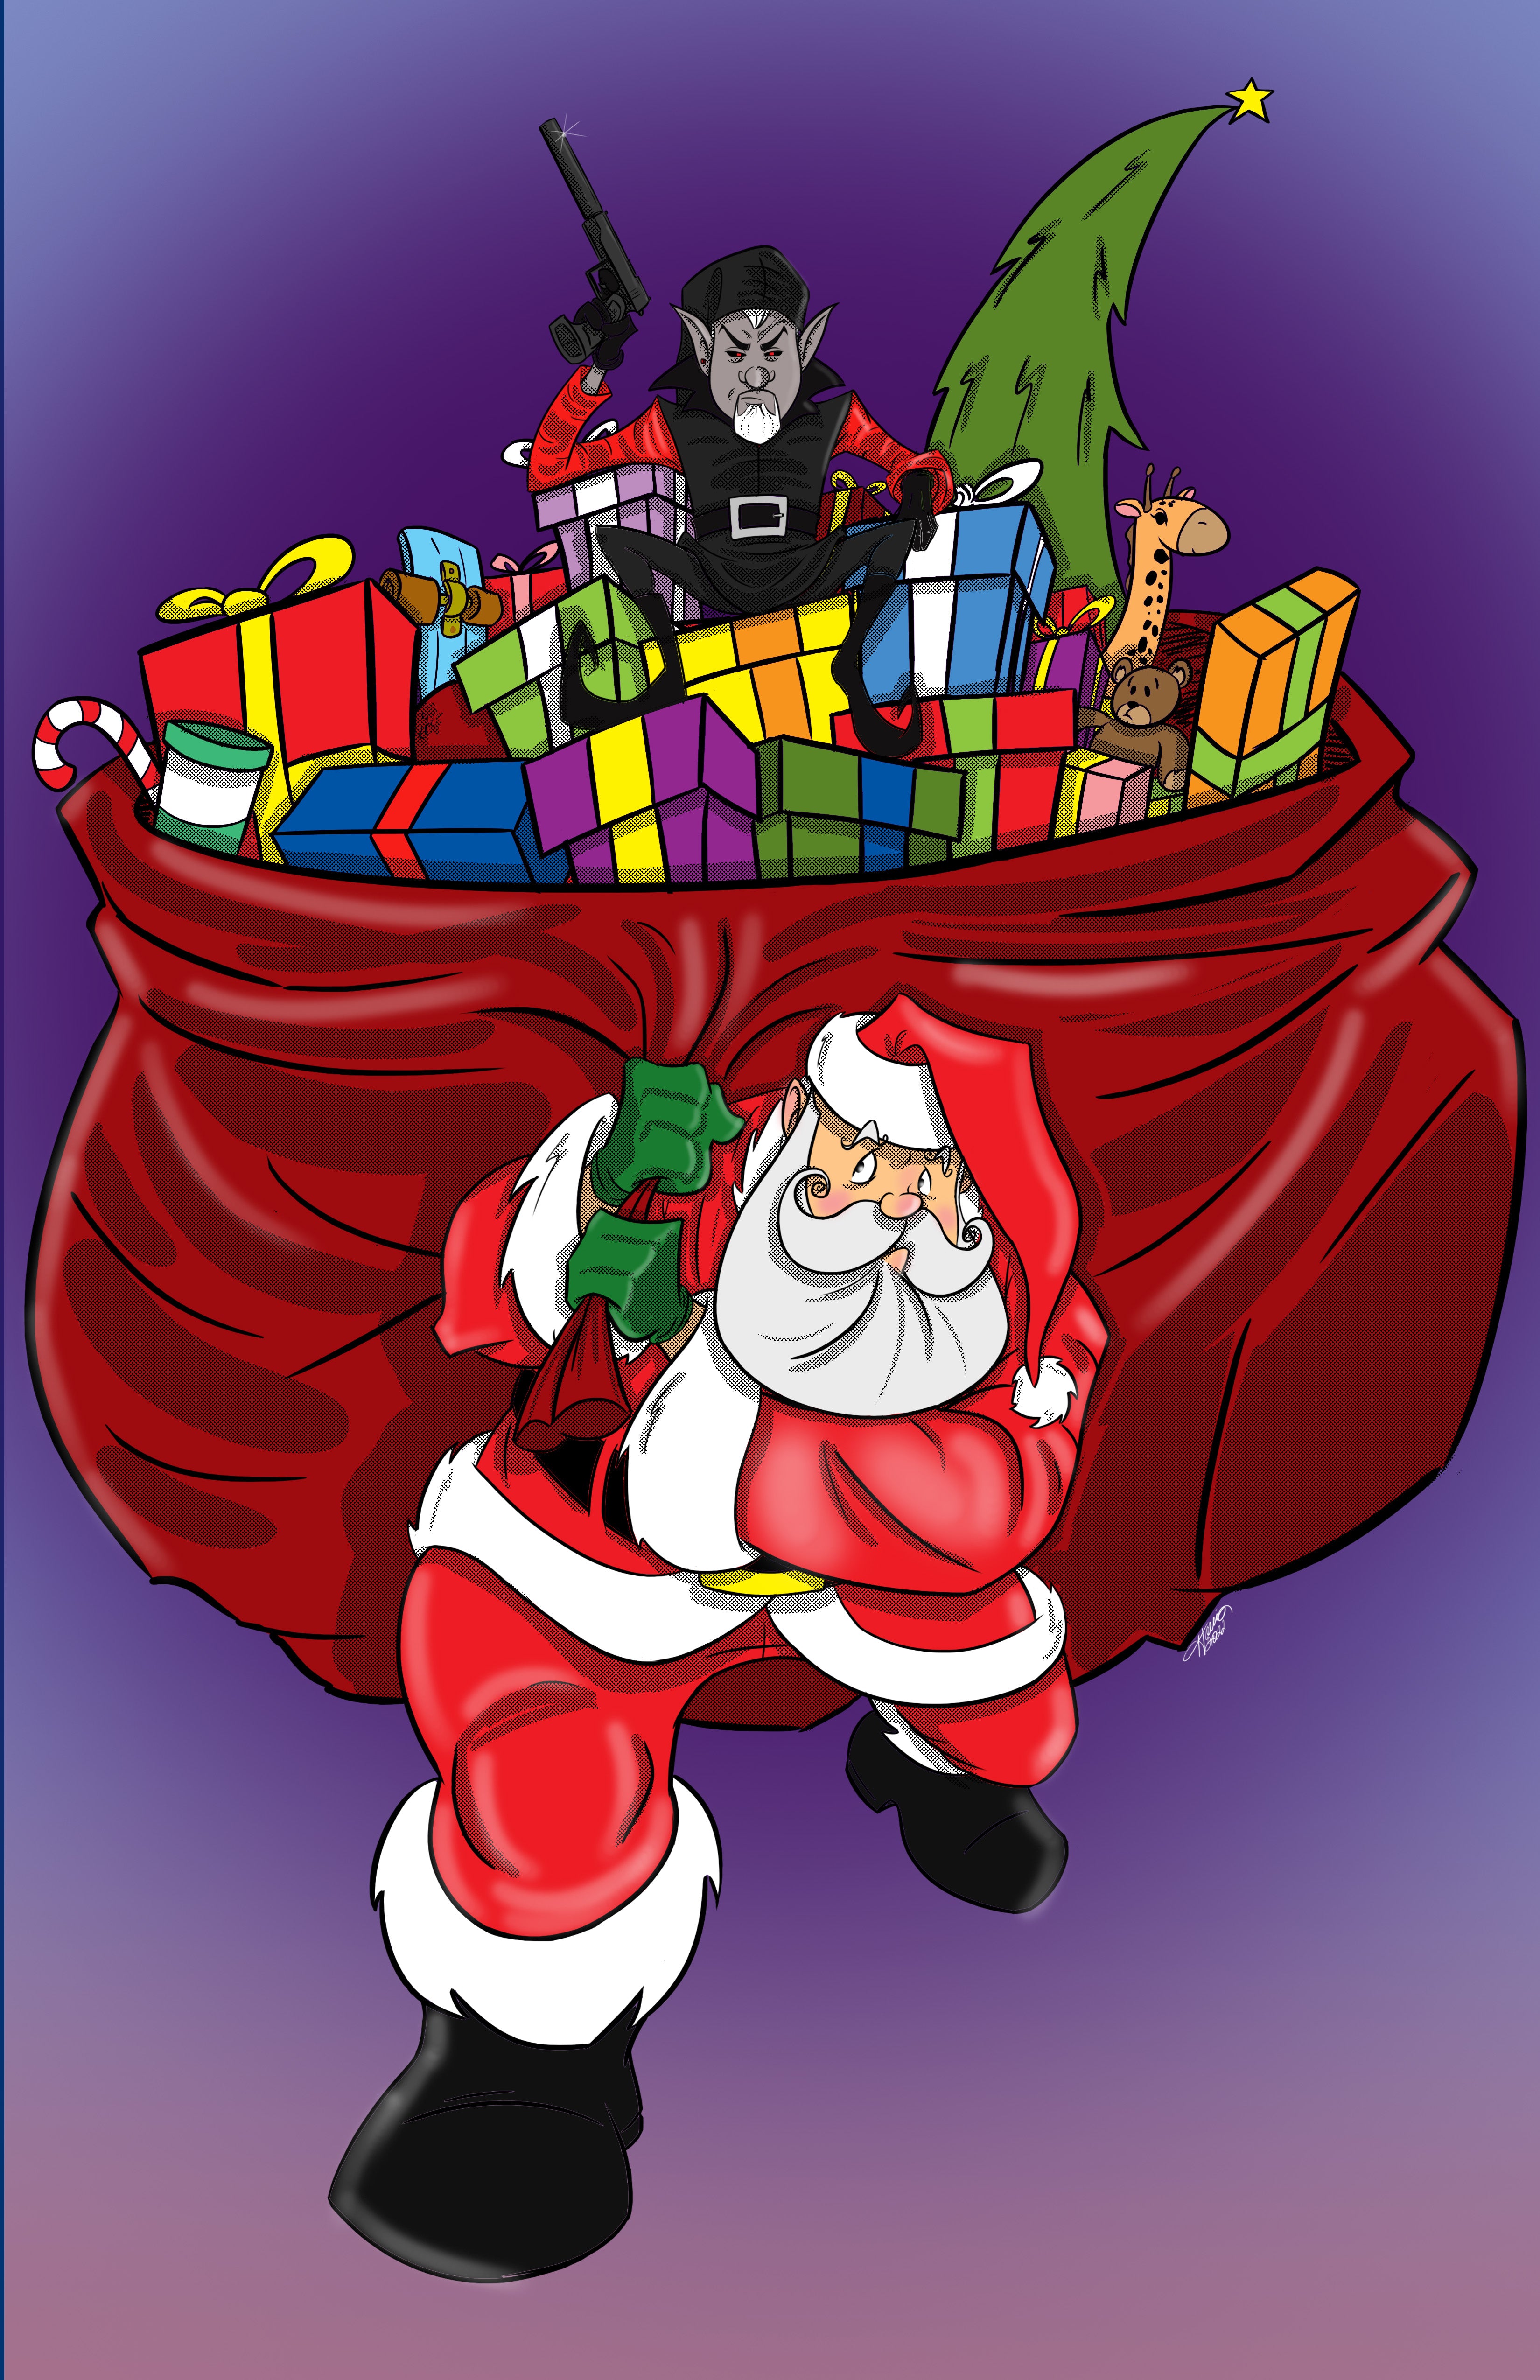 Image of Hit-Elf sitting atop Santa Claus' big sack of presents